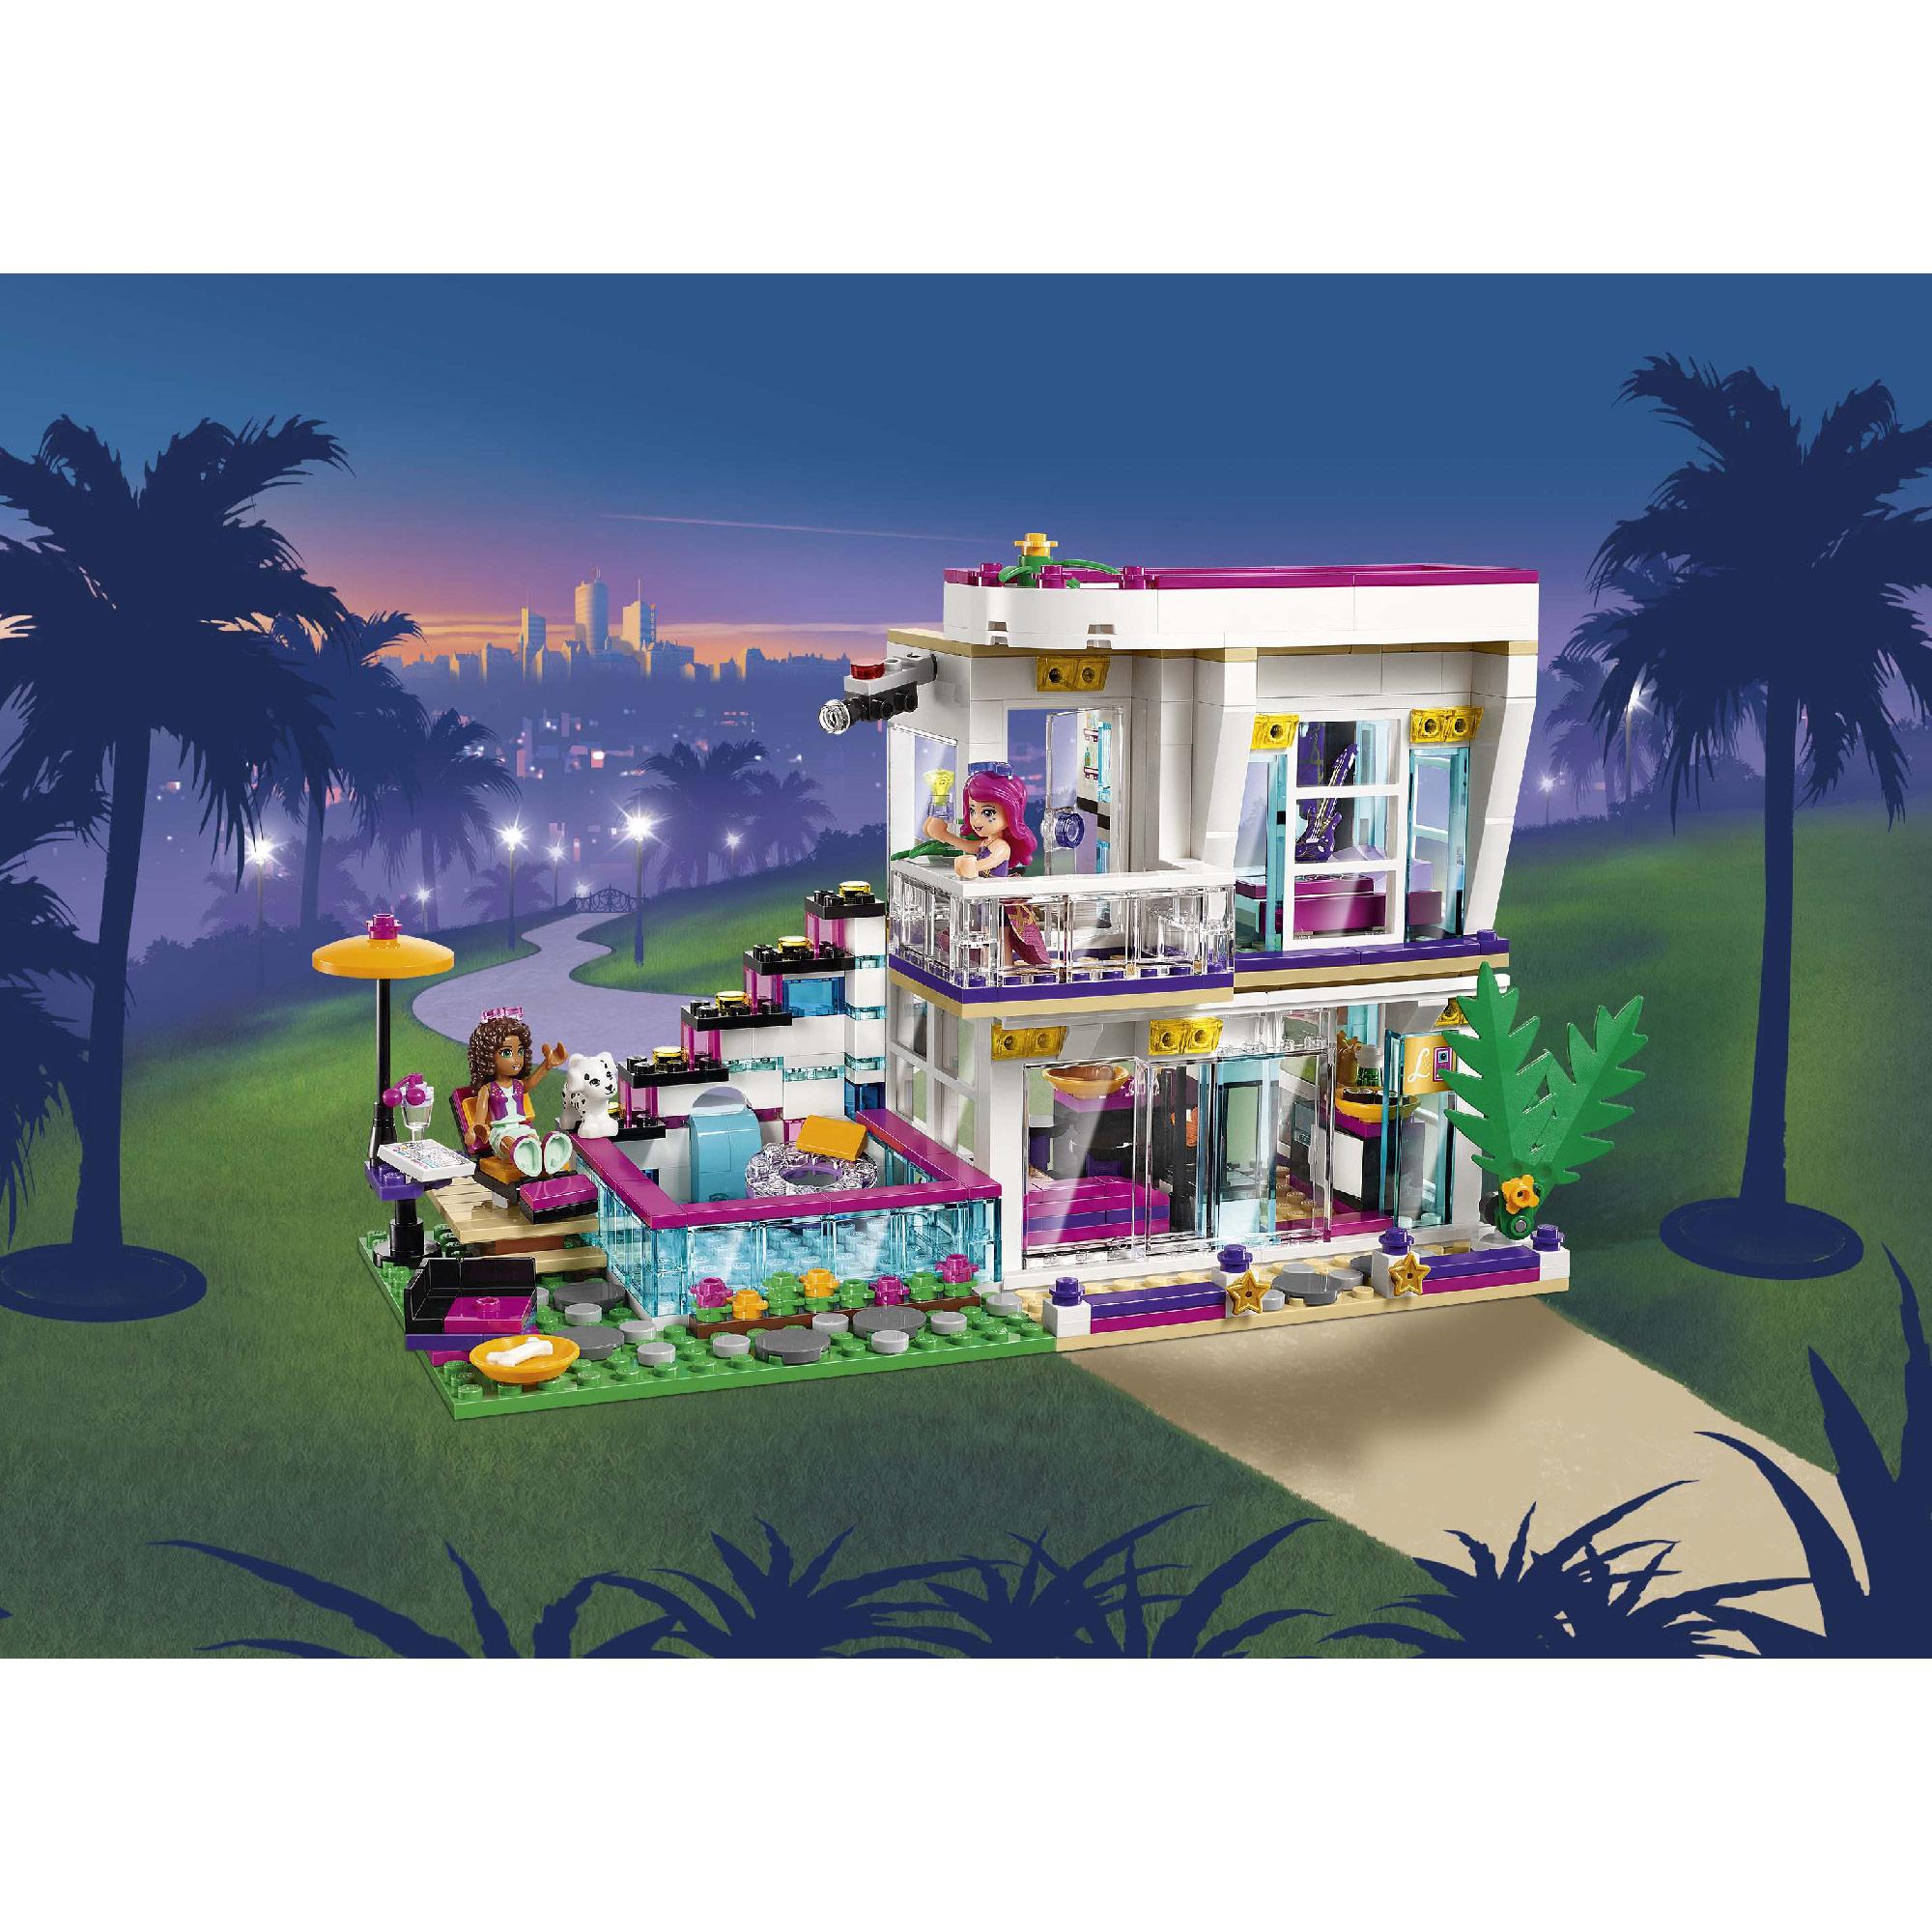 Đồ chơi Lego Friends Livi’s Pop Star House 41135 – Biệt thự của Livi